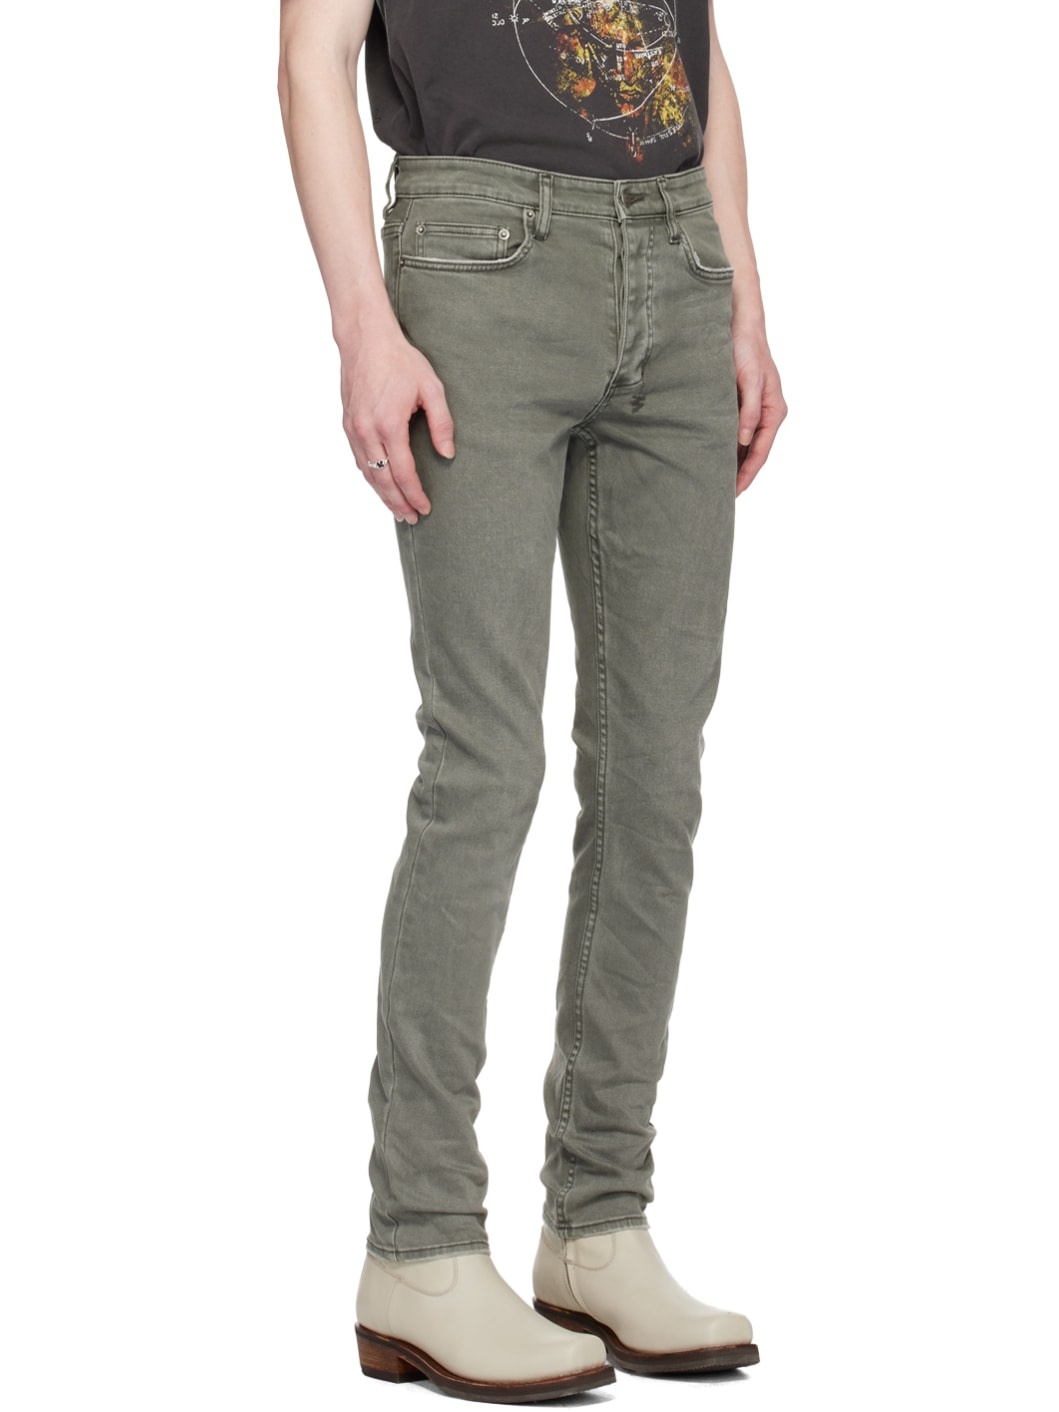 Gray Chitch Surplus Jeans - 2